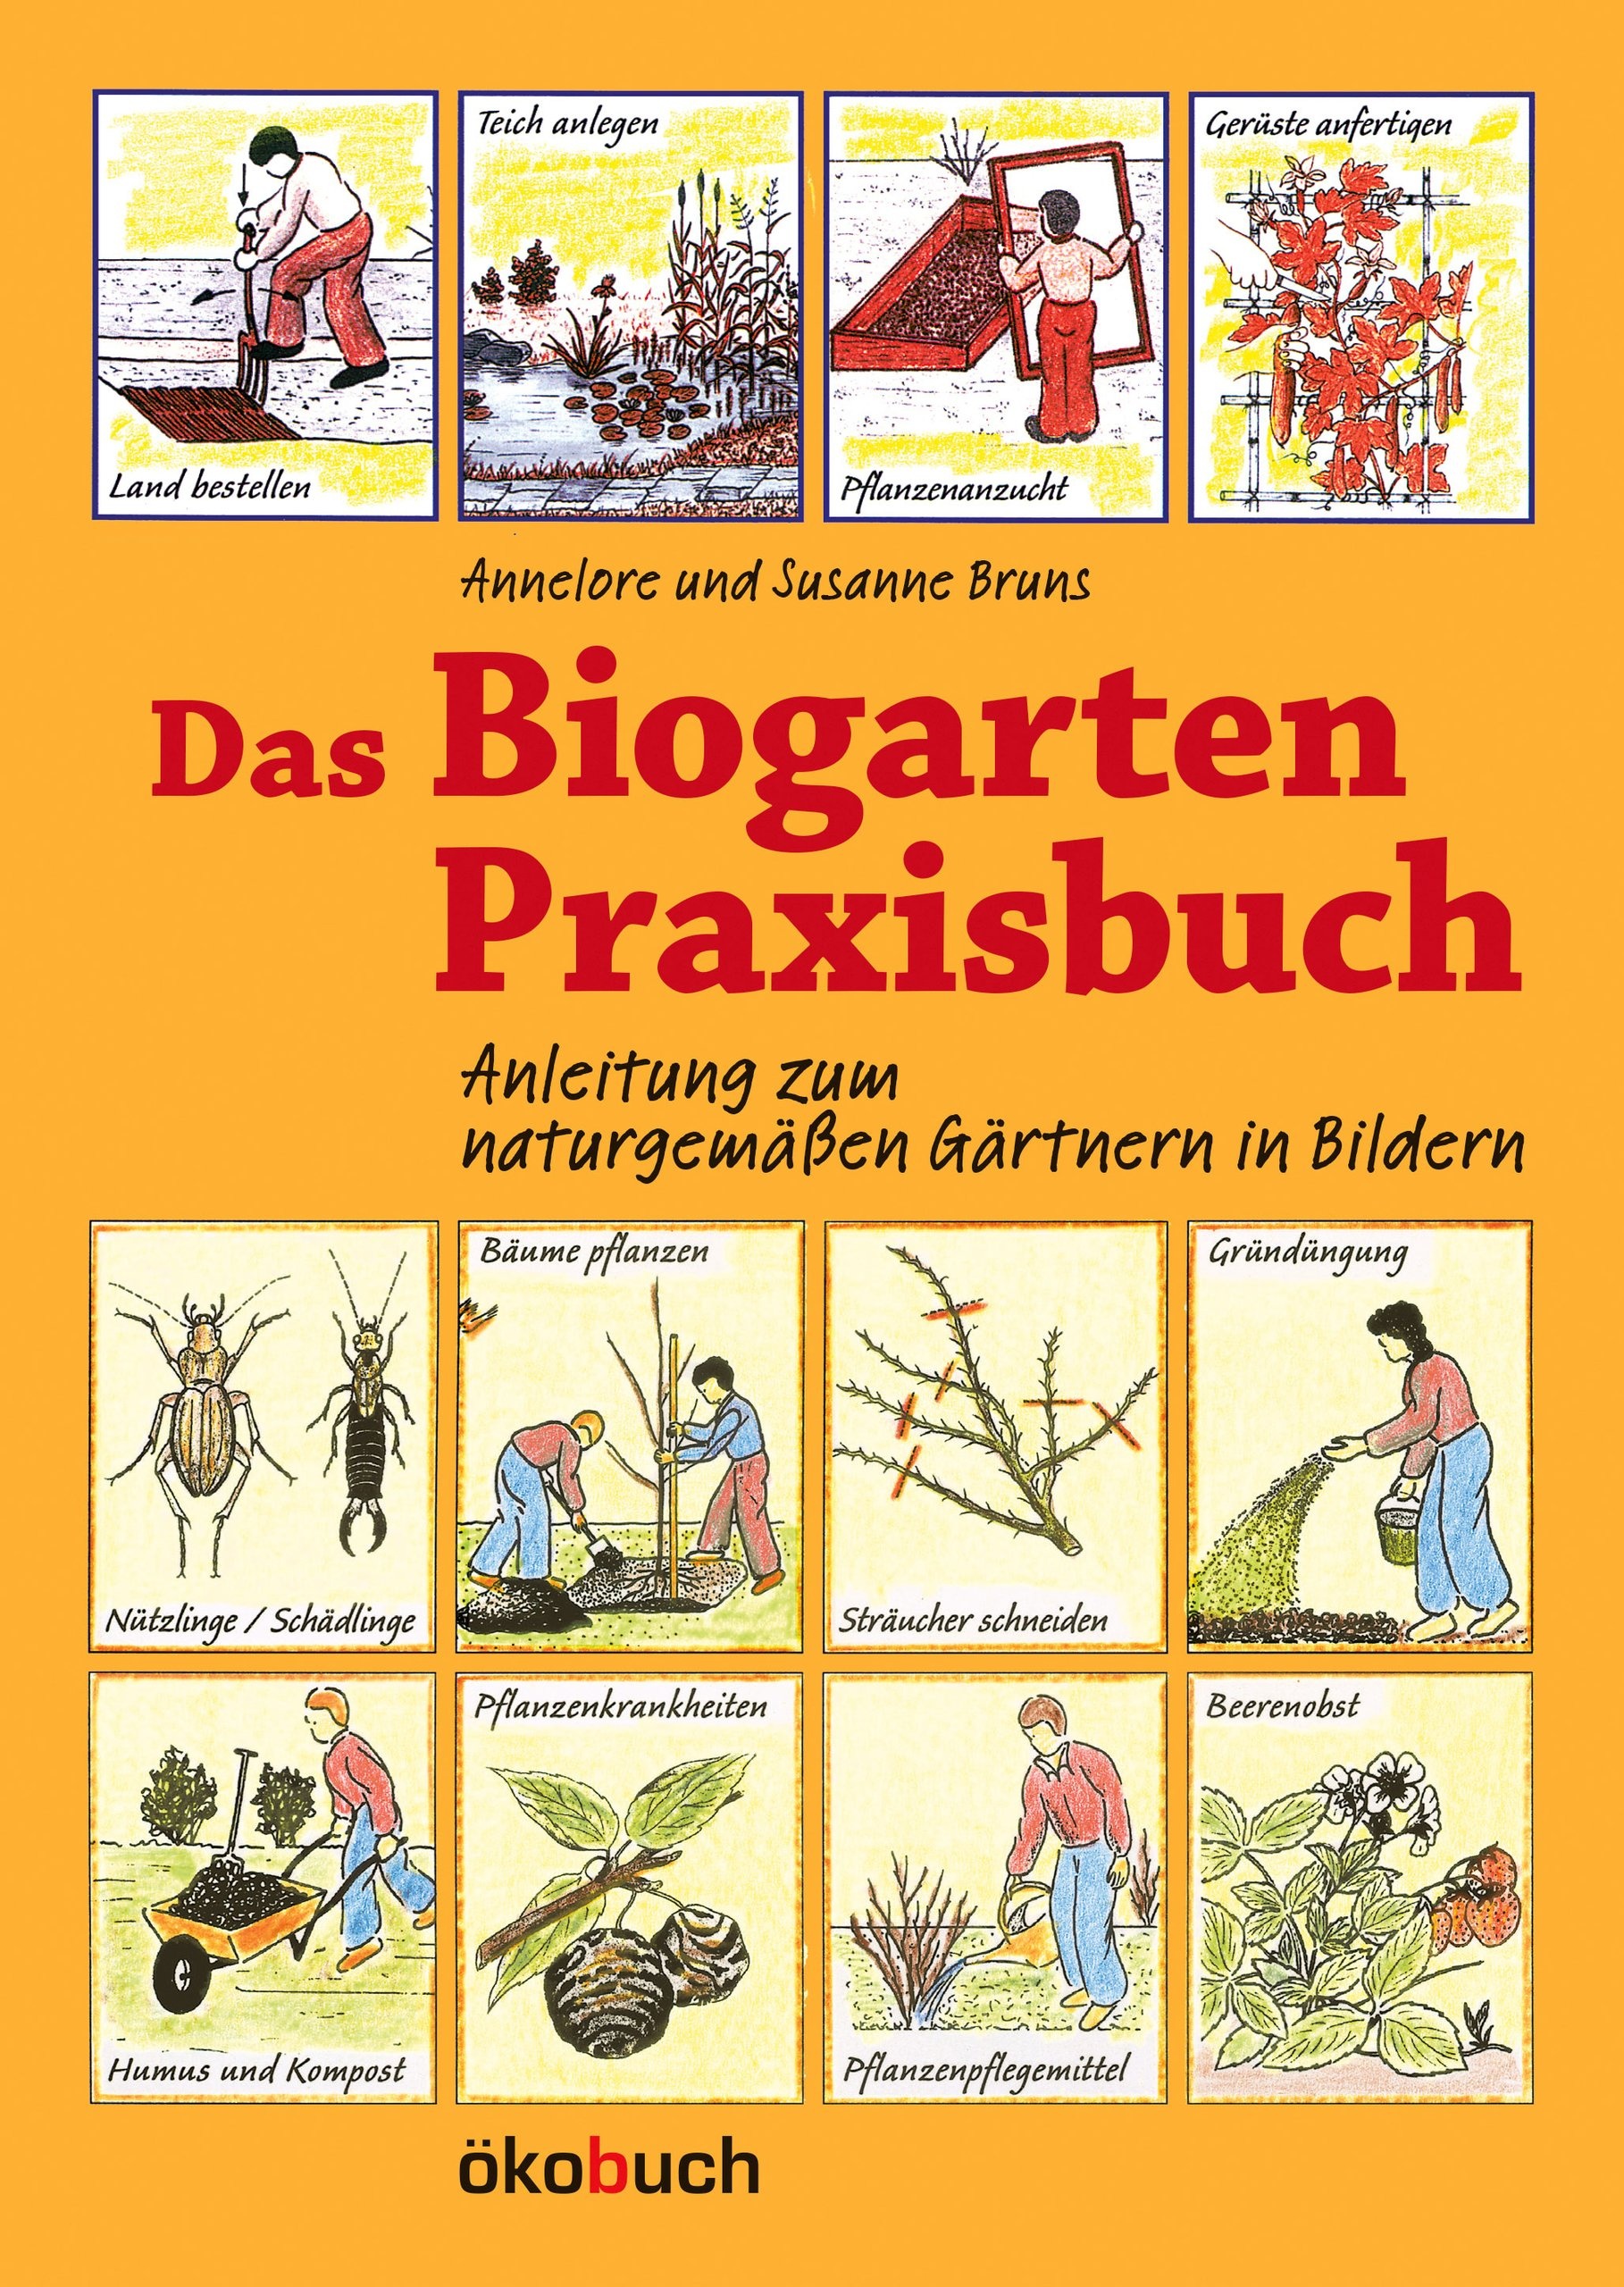 Das Biogarten Praxisbuch – Anleitung zum naturgemäßen Gärtner in Bildern